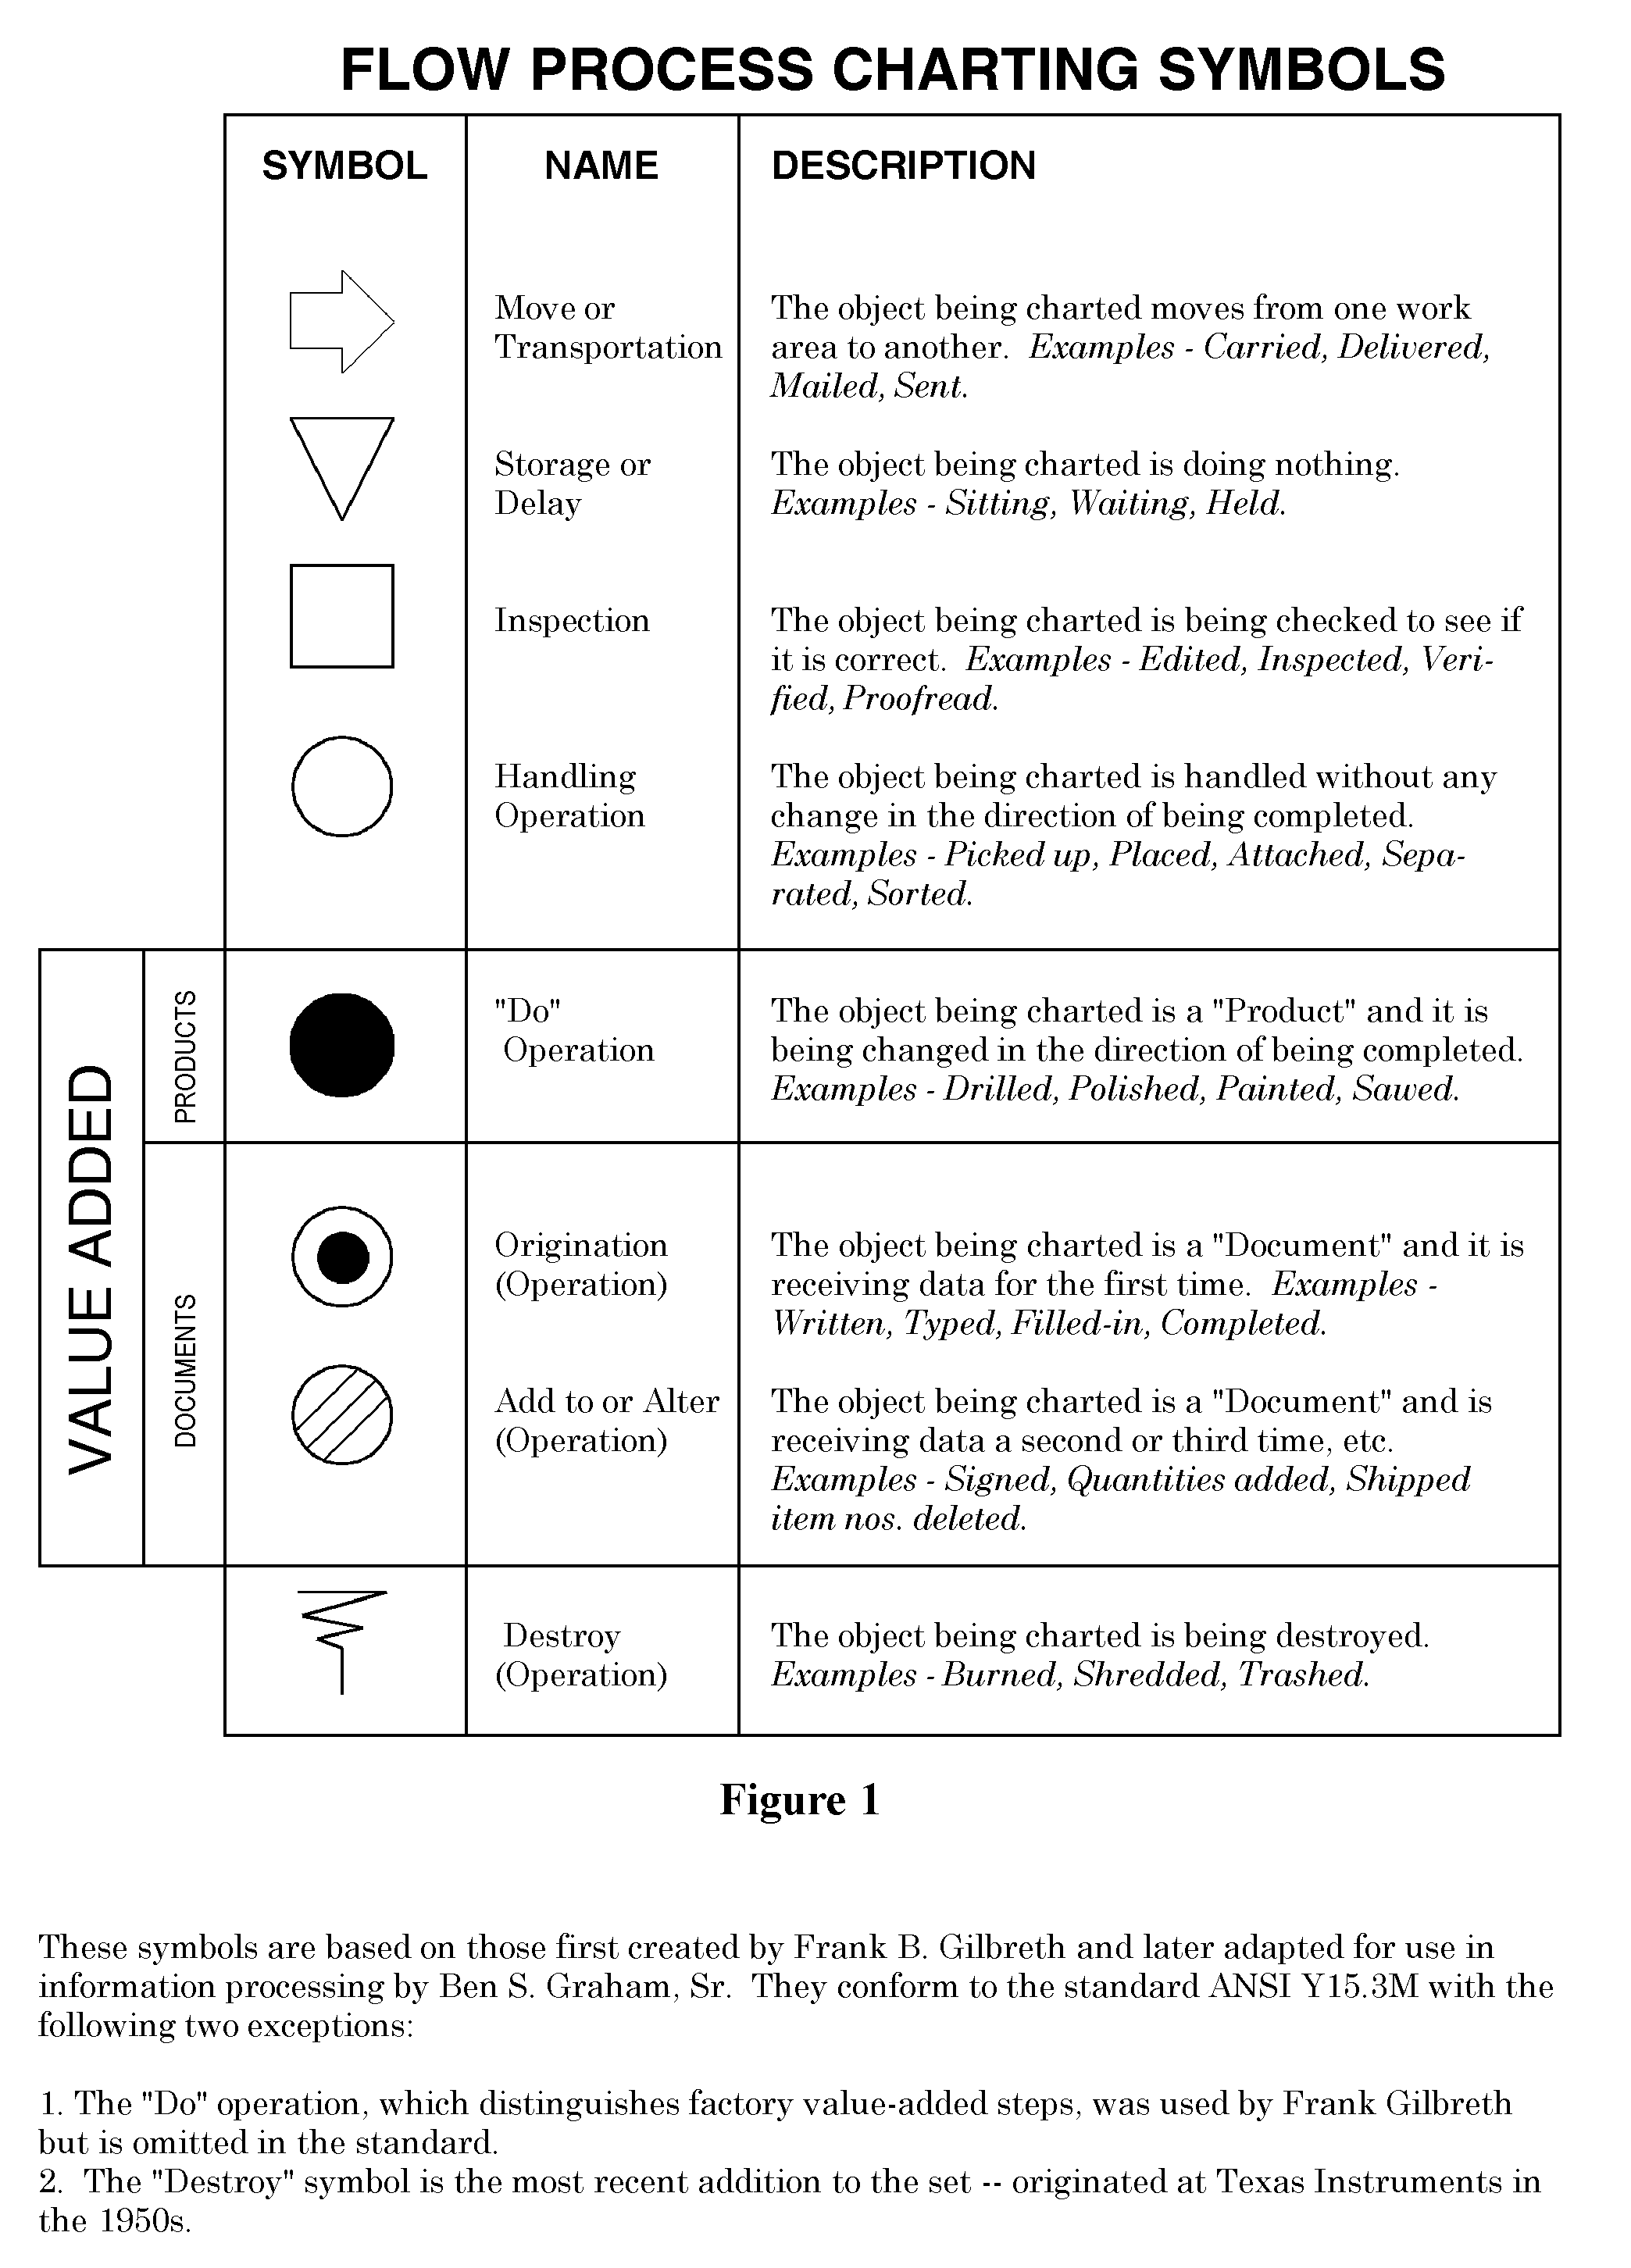 Symbols with Description